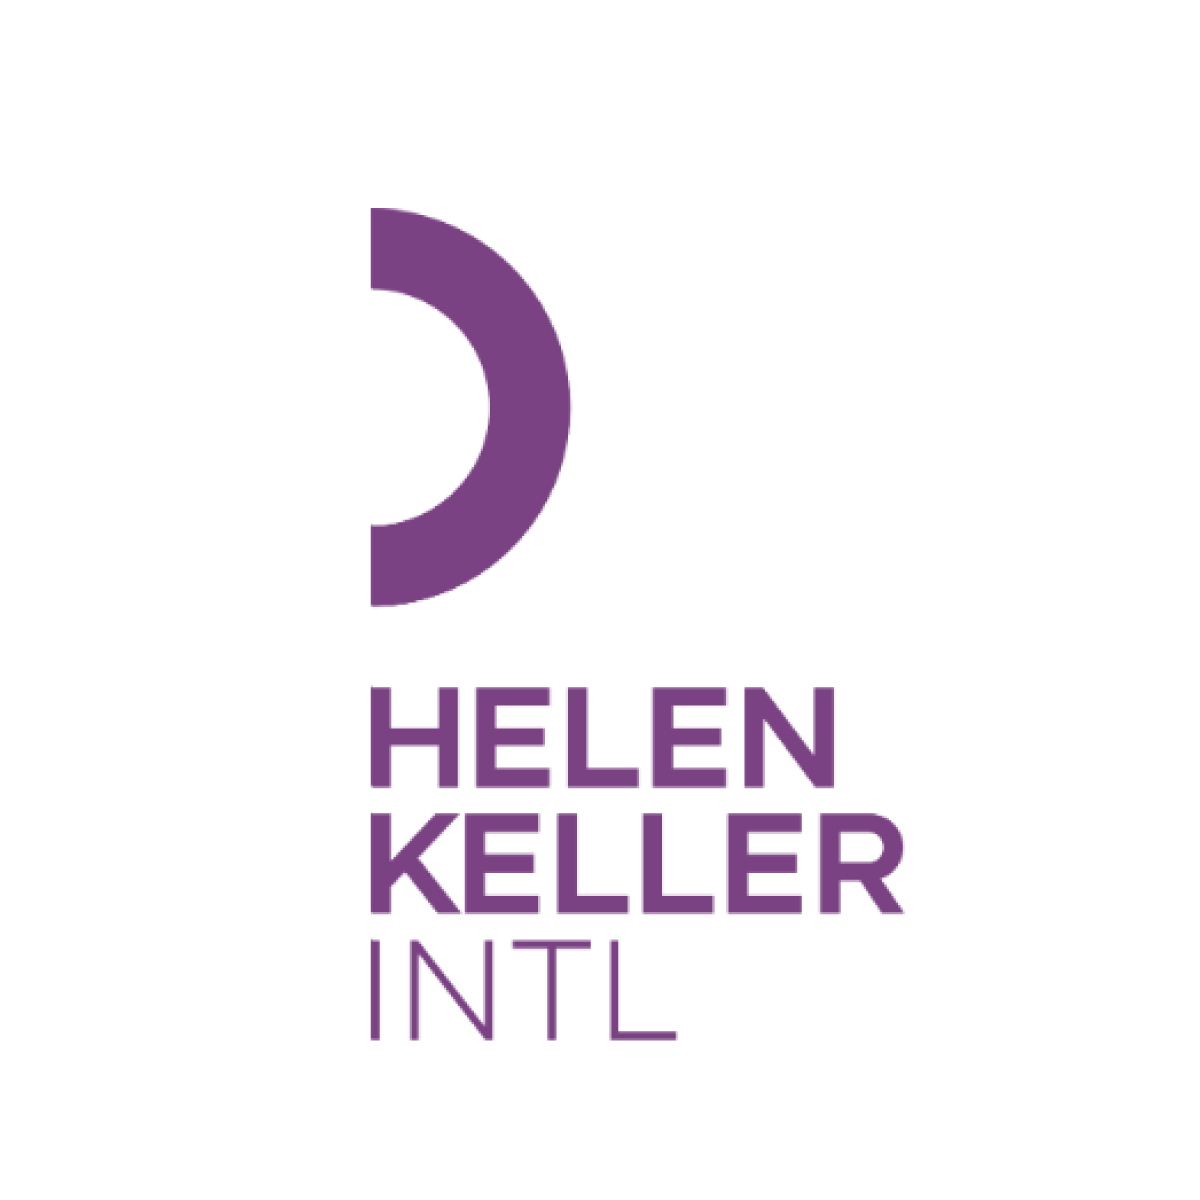 Helen Keller Internacional 
hki.org 